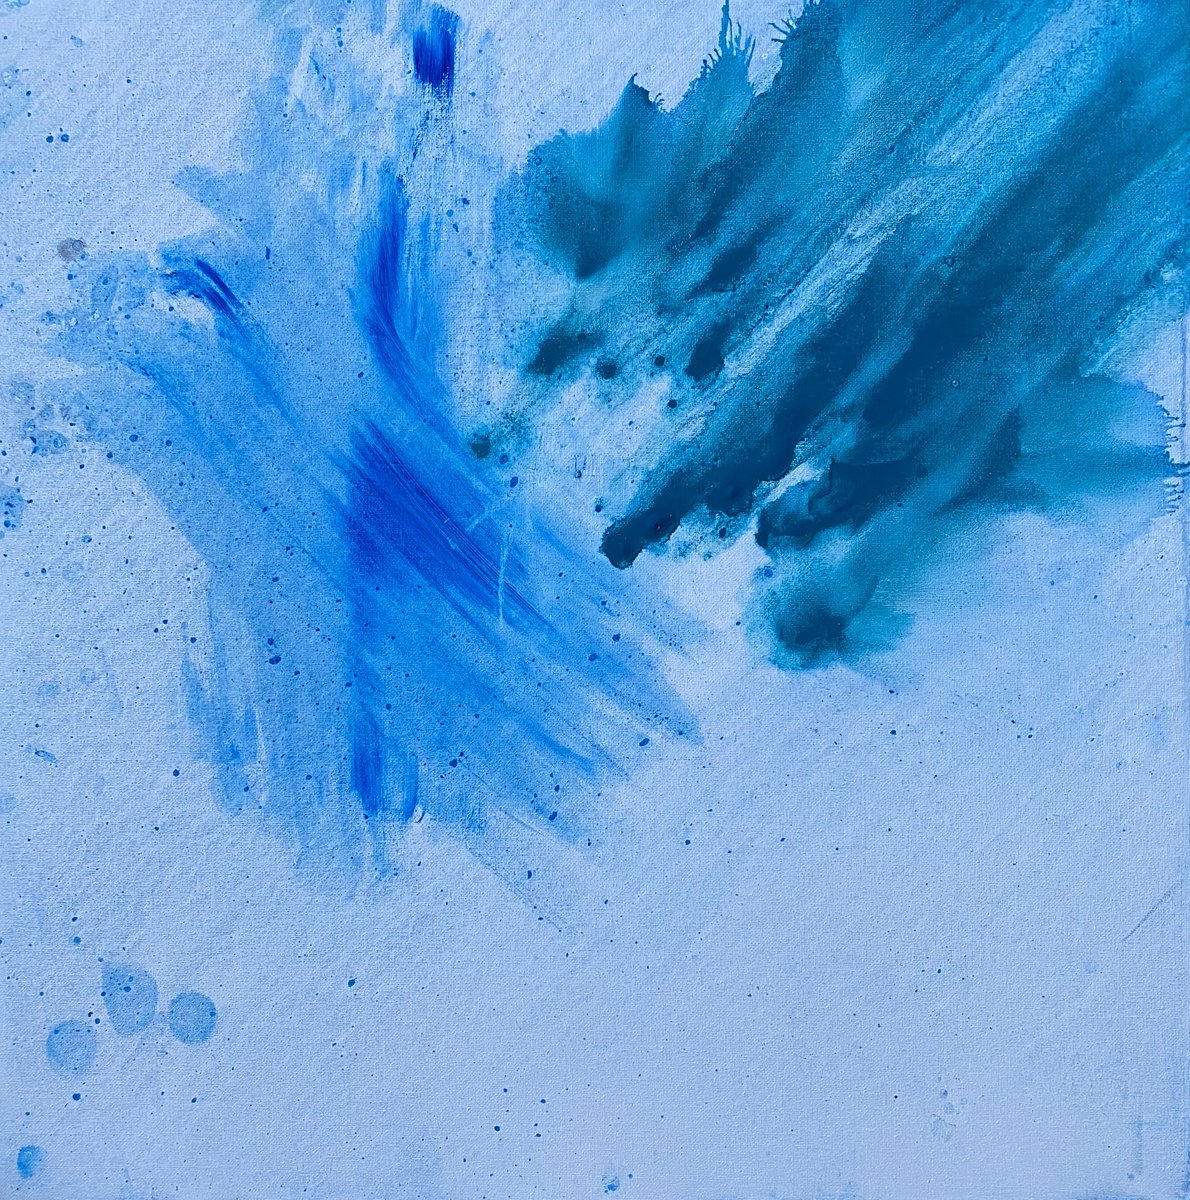 Blue abstract painting 2205202005 by Natalya Burgos